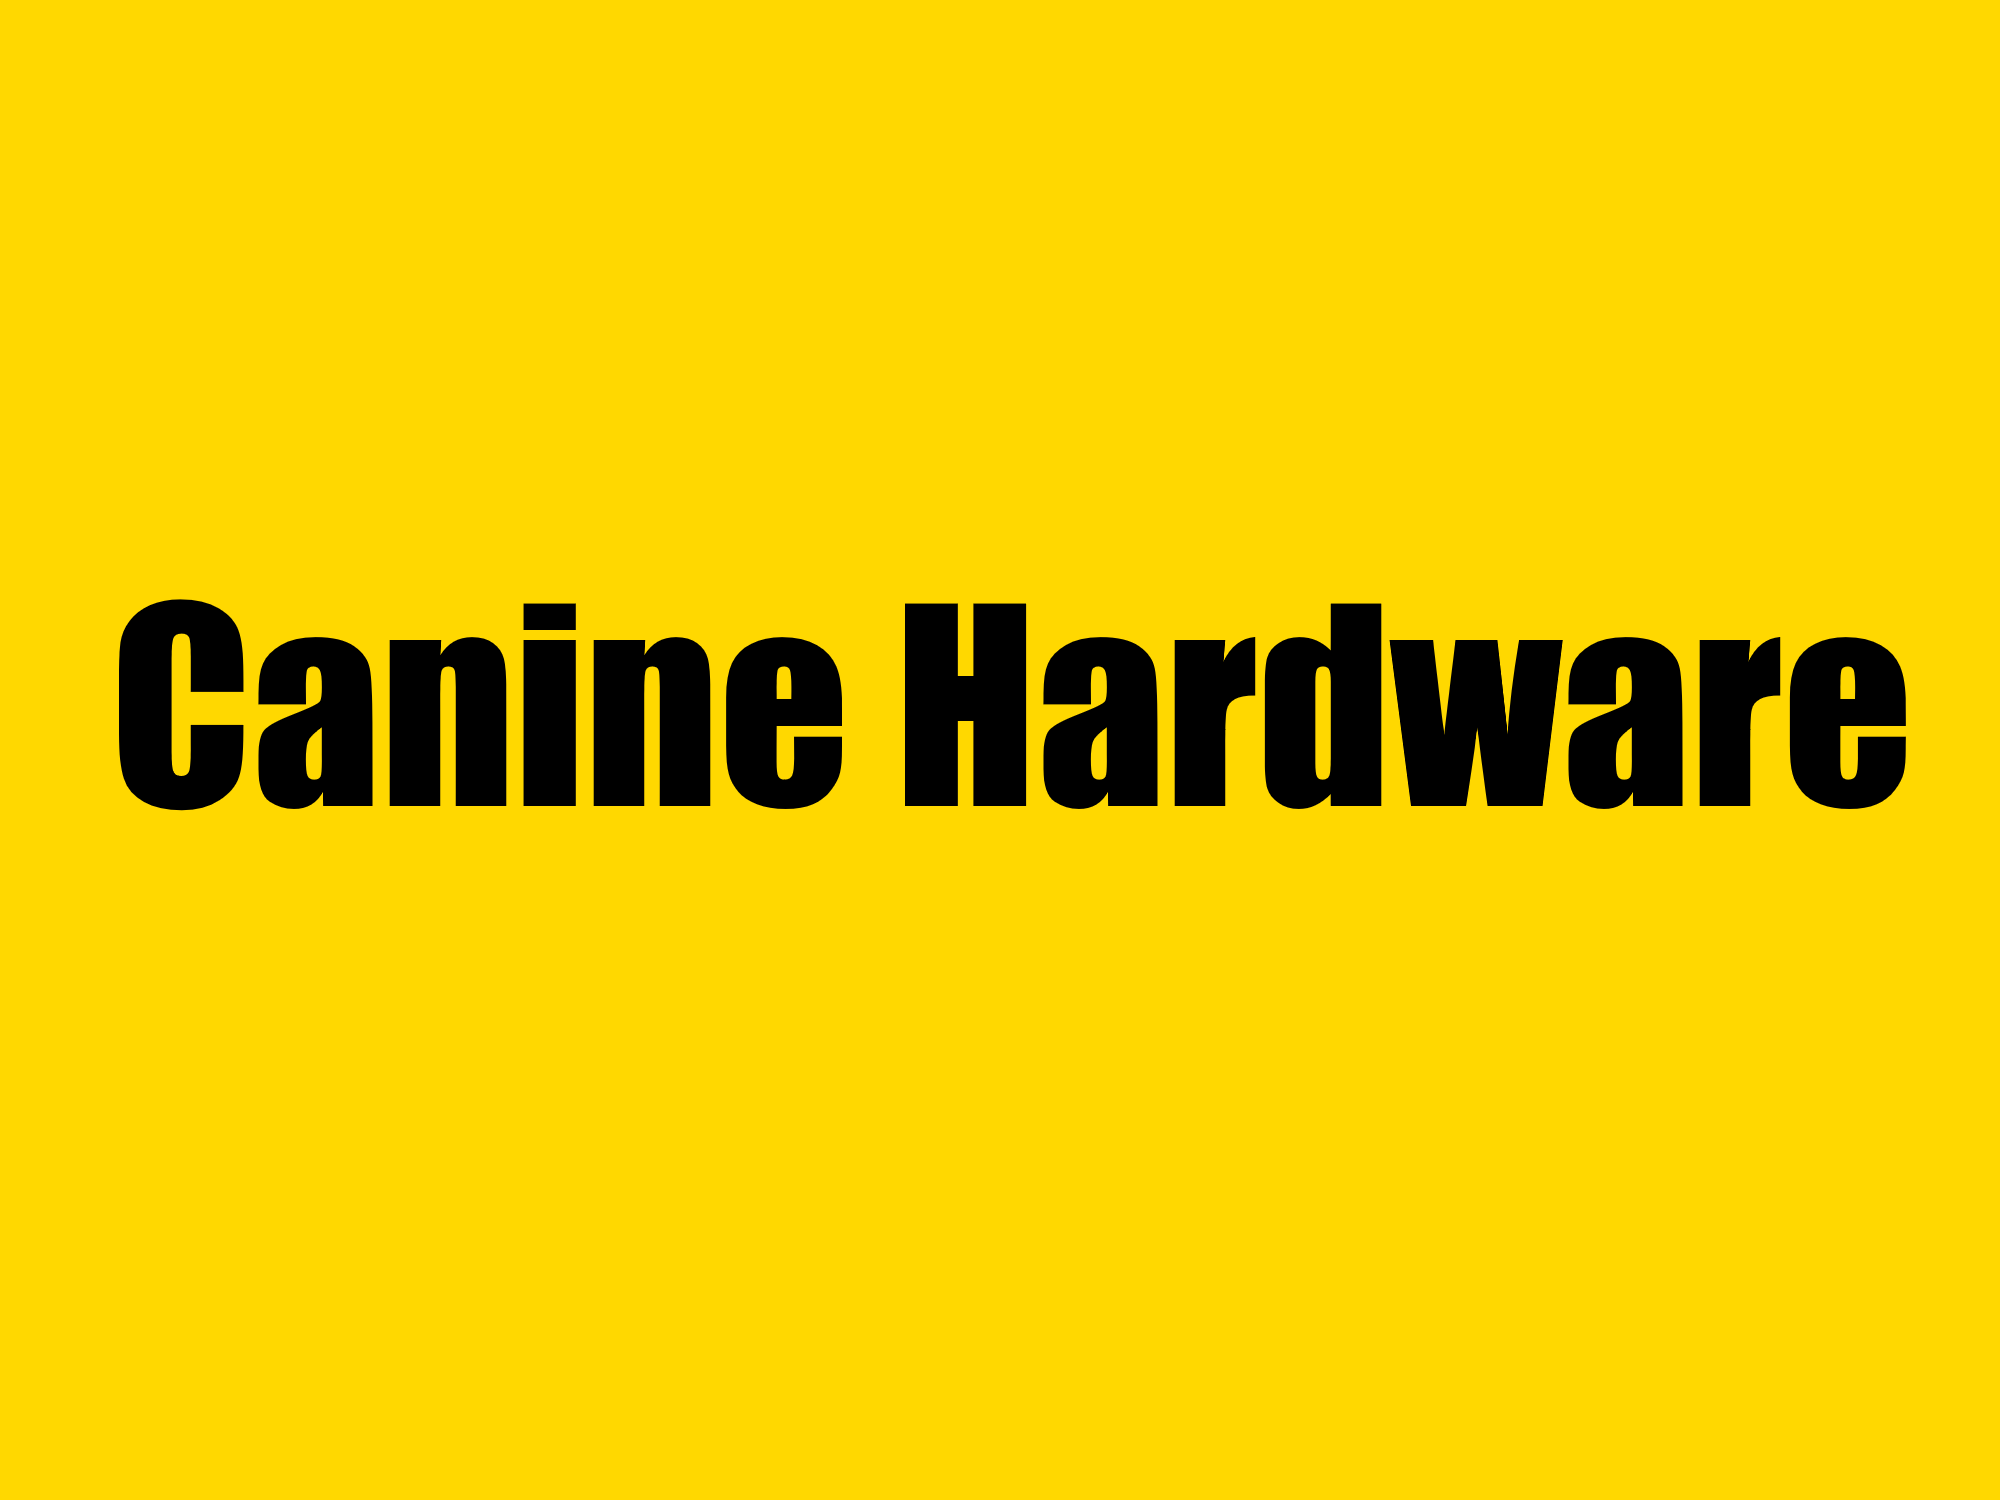 Hardware Canino